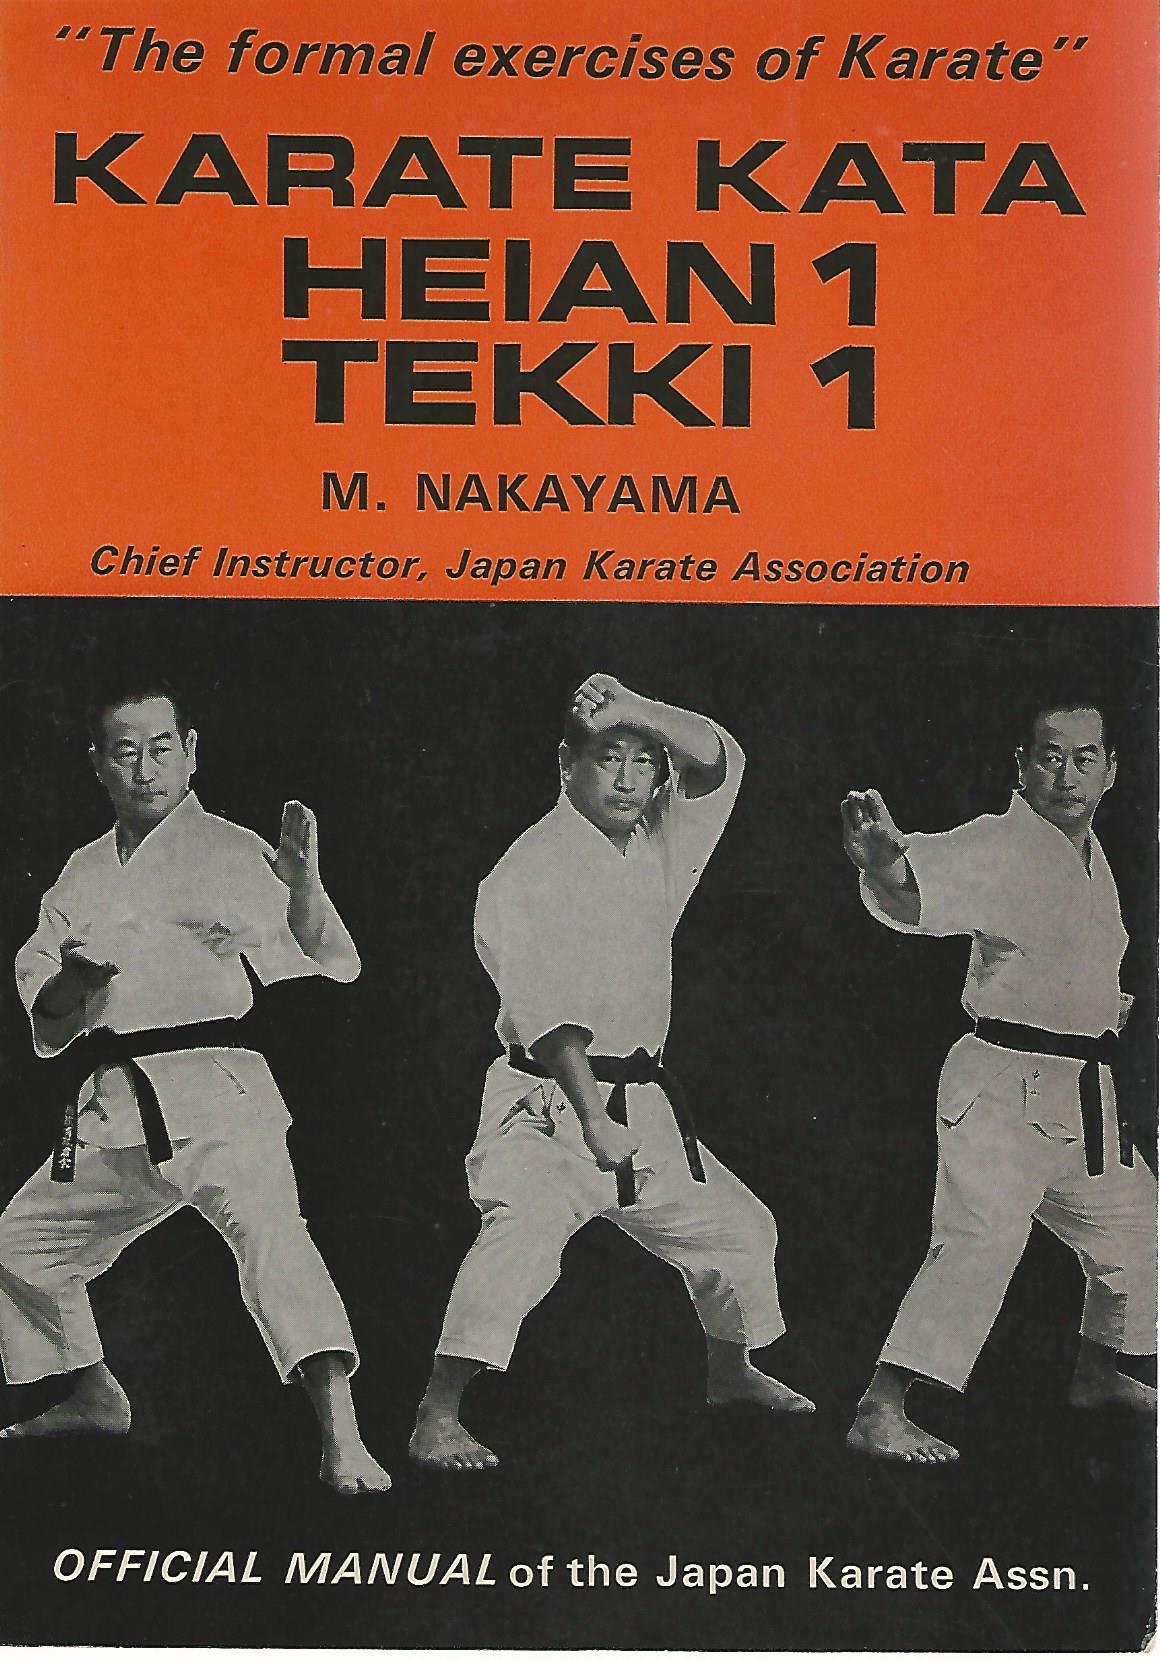 Karate Kata - Heian 1 - Tekki 1 "The formal exercises of karate"